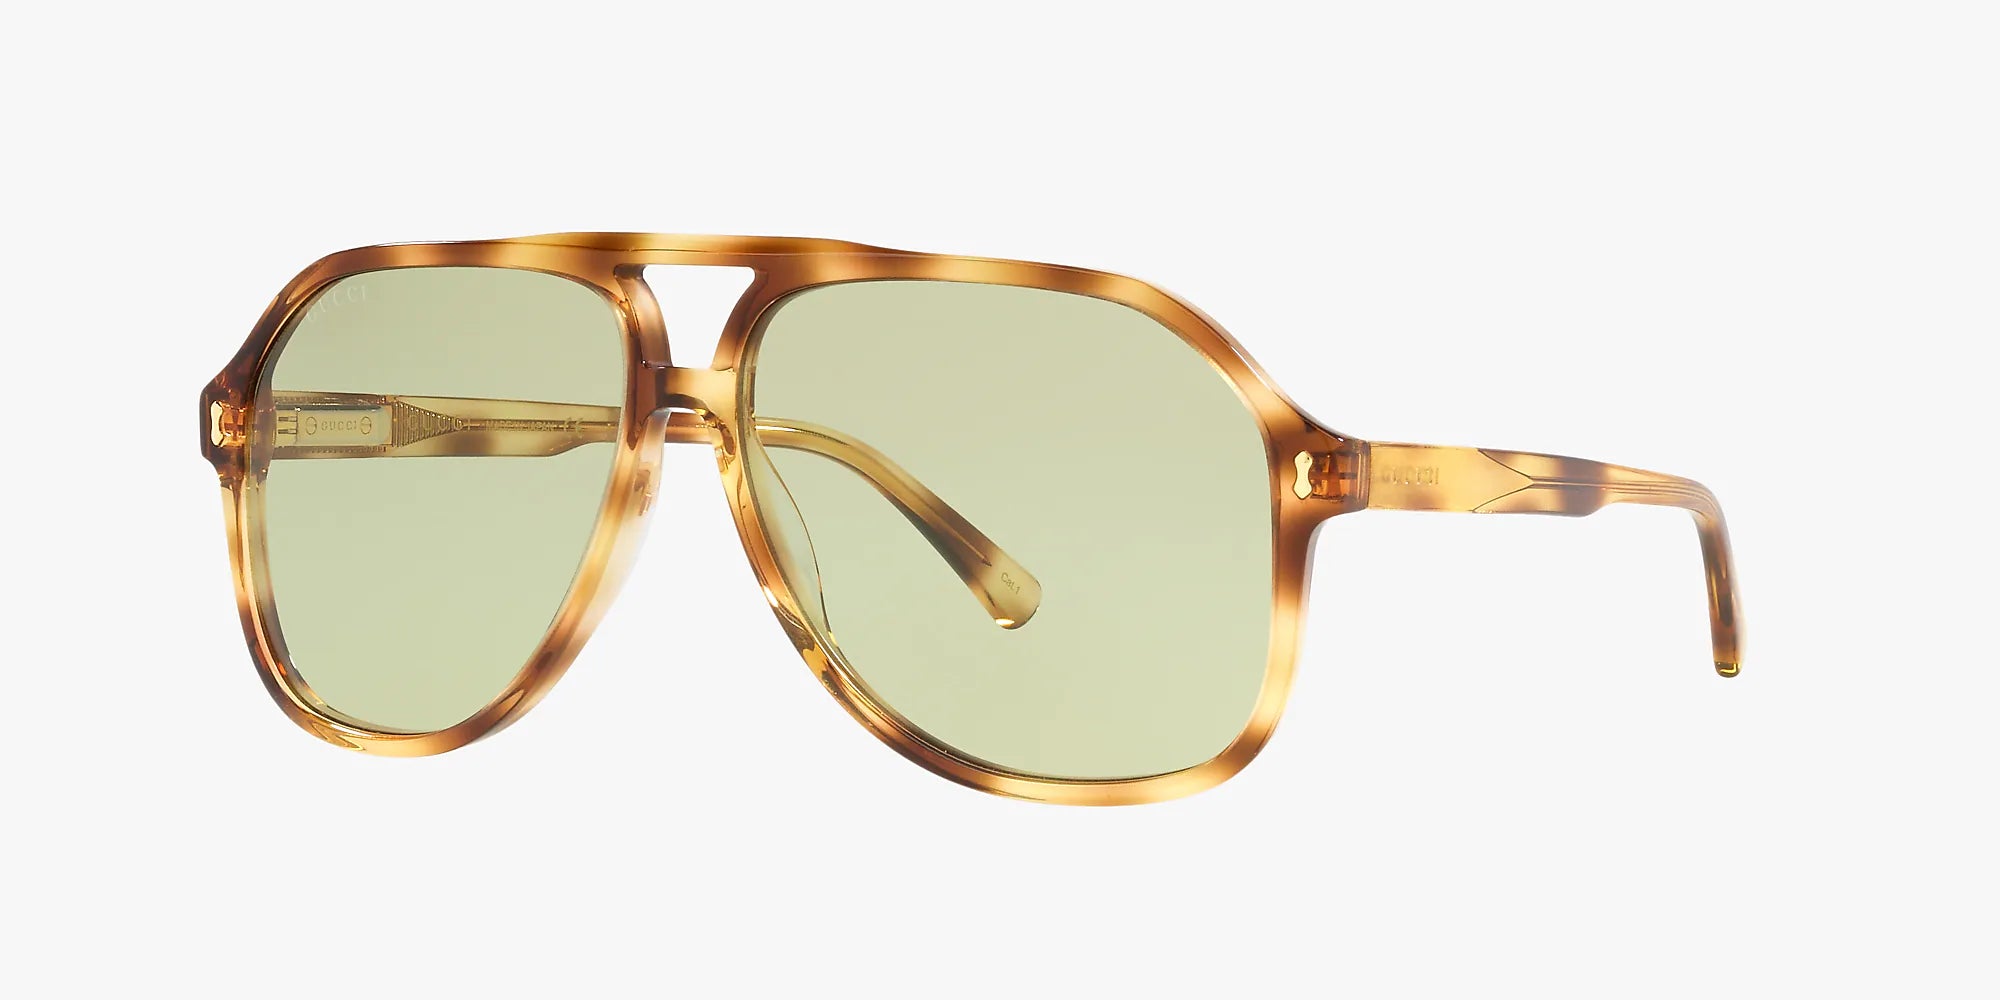 Gucci Aviator Sunglasses, Gold